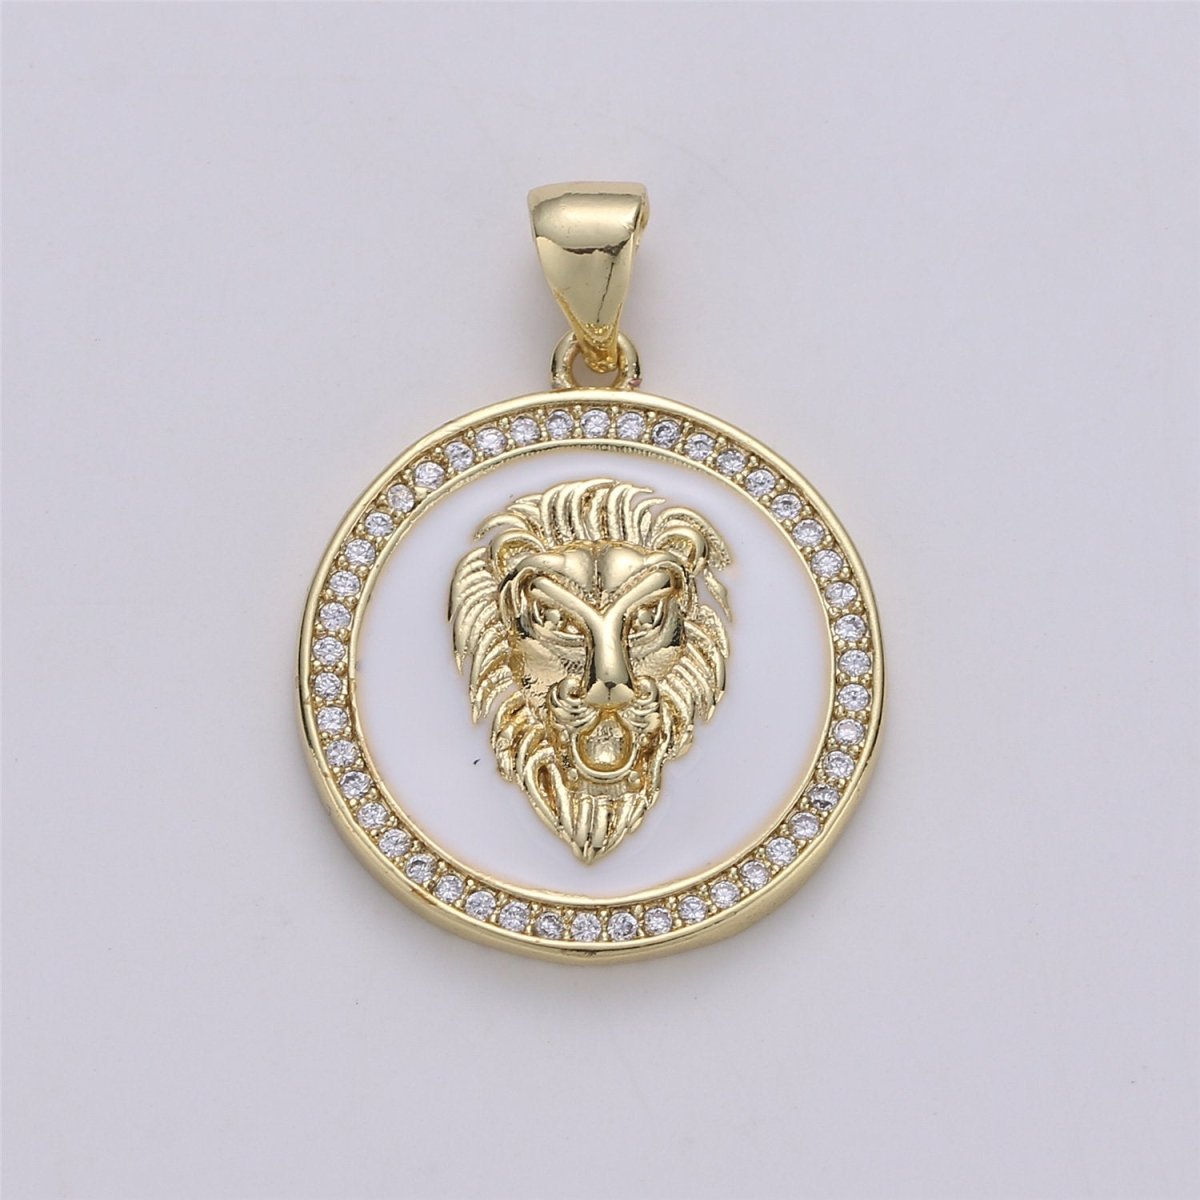 3D Micro Pave Charm Gold Filled Medallion, Lion Medallion, Lion Pendant, Lion Jewelry, Lion Necklace Charm for Statement Necklace Component I-583 - DLUXCA